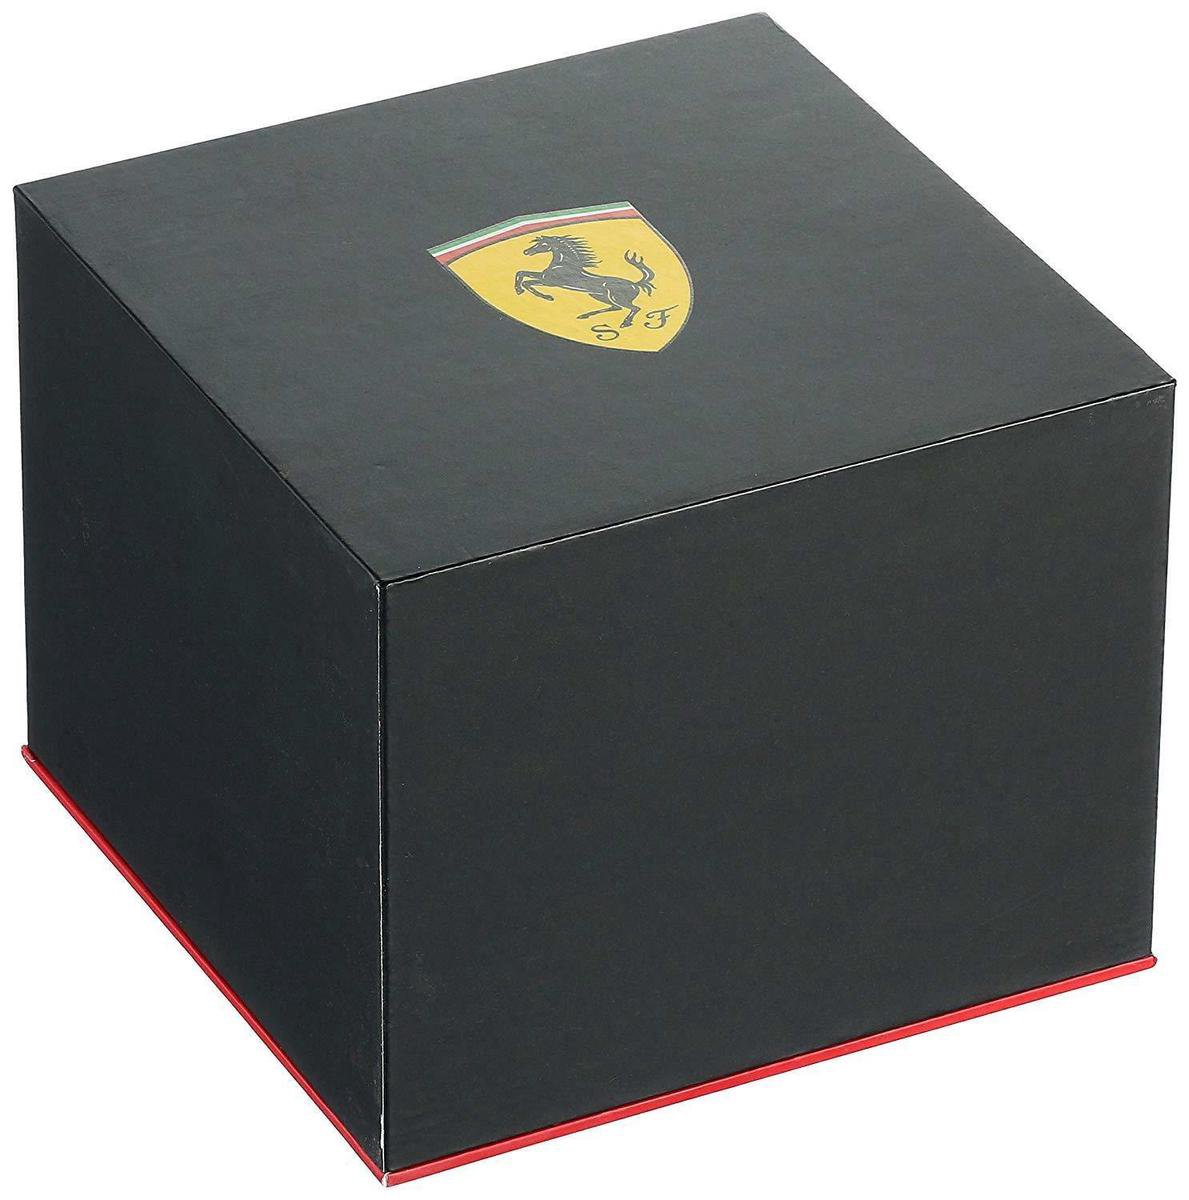 Montre Scuderia Ferrari Homme D50 Chrono 0830174 - Bijoux de Mode